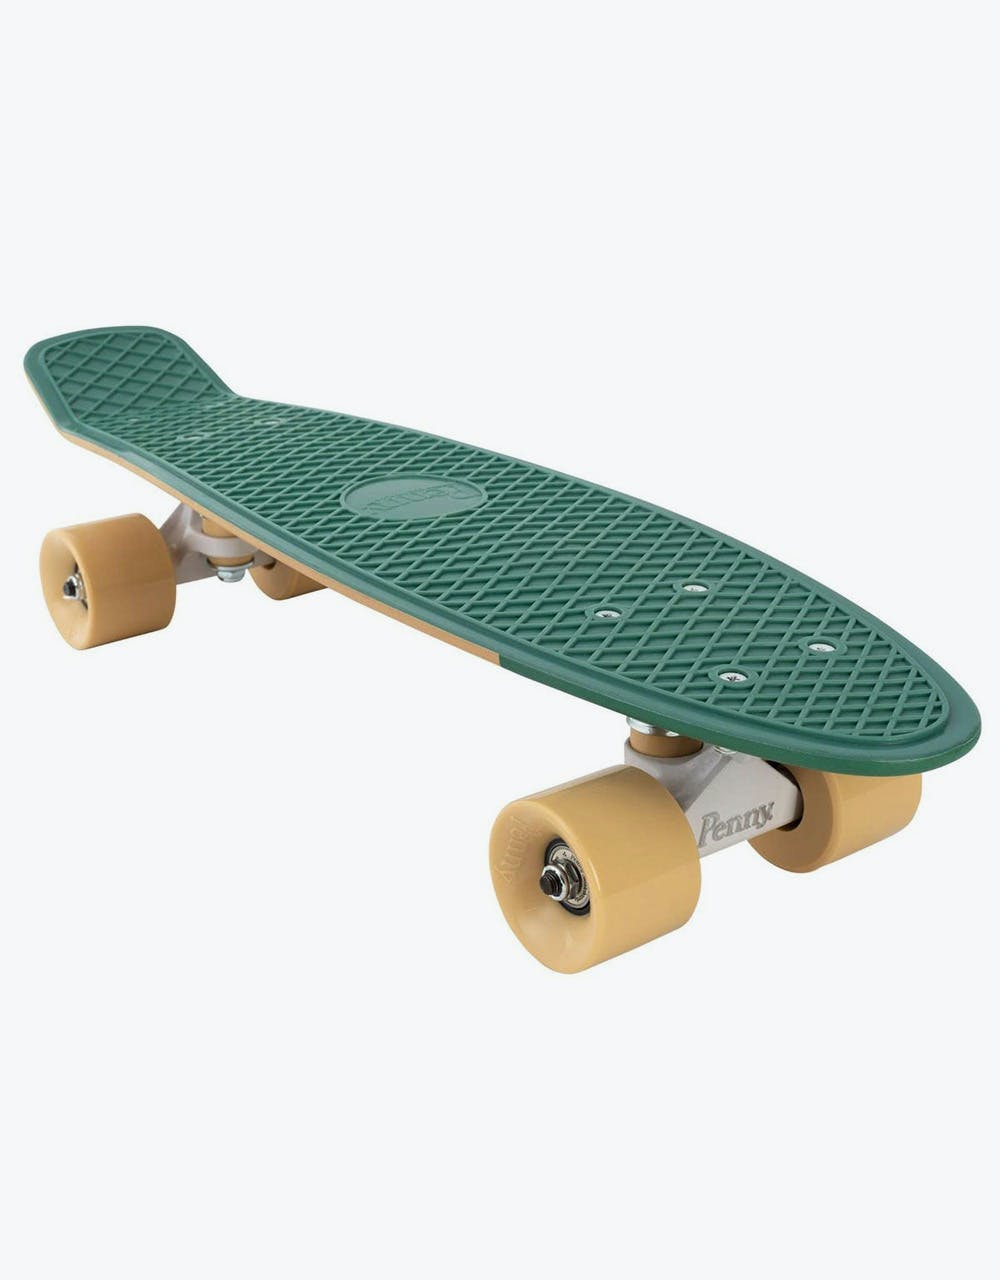 Penny Skateboards Classic Cruiser - 22" - Swirl Green